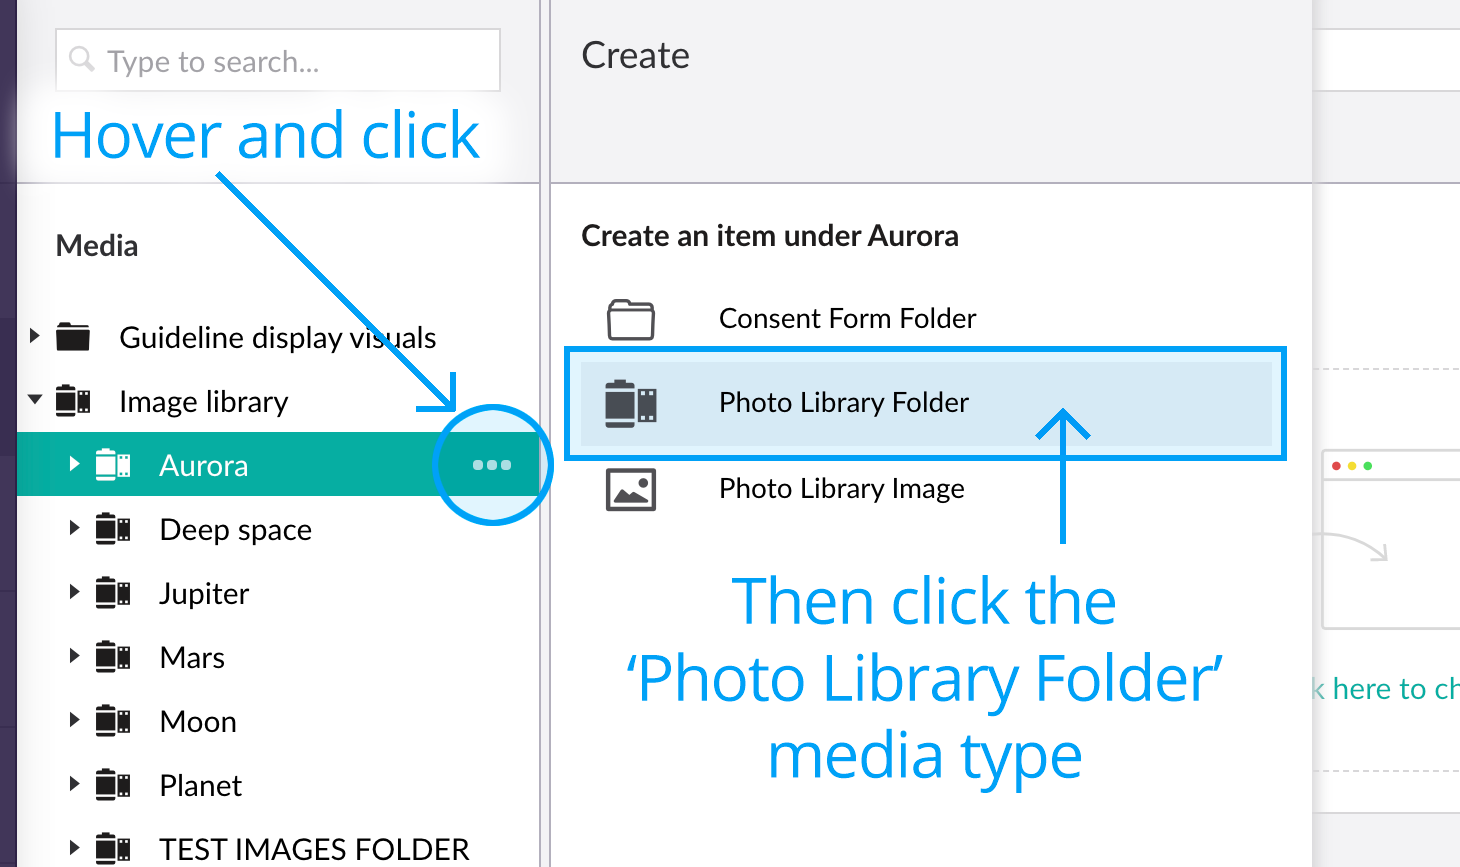 Create a Photo Library Folder